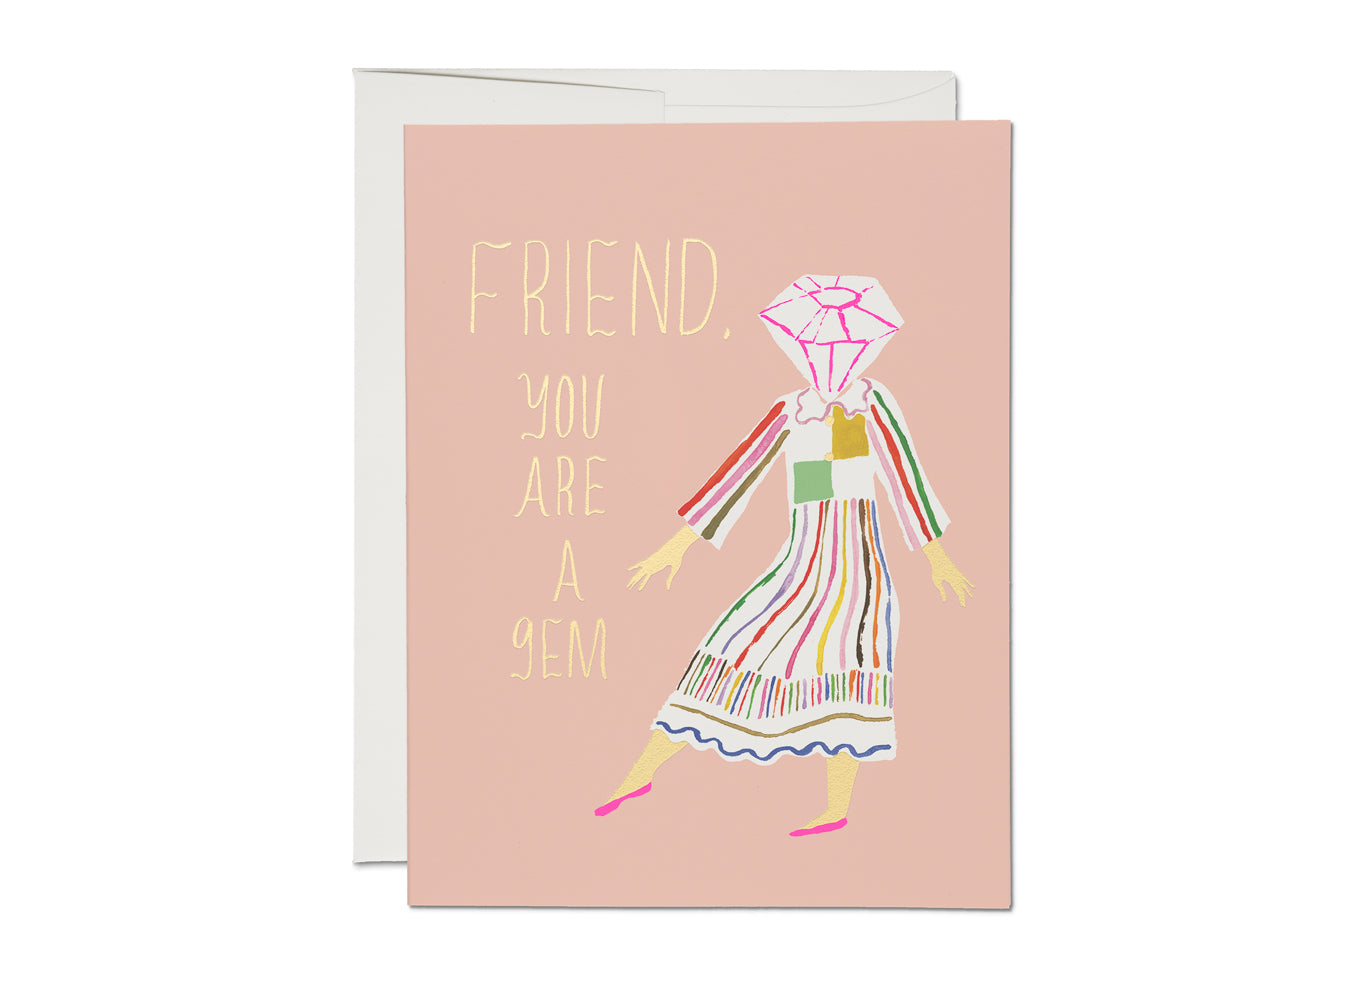 Tracy Friendship Card